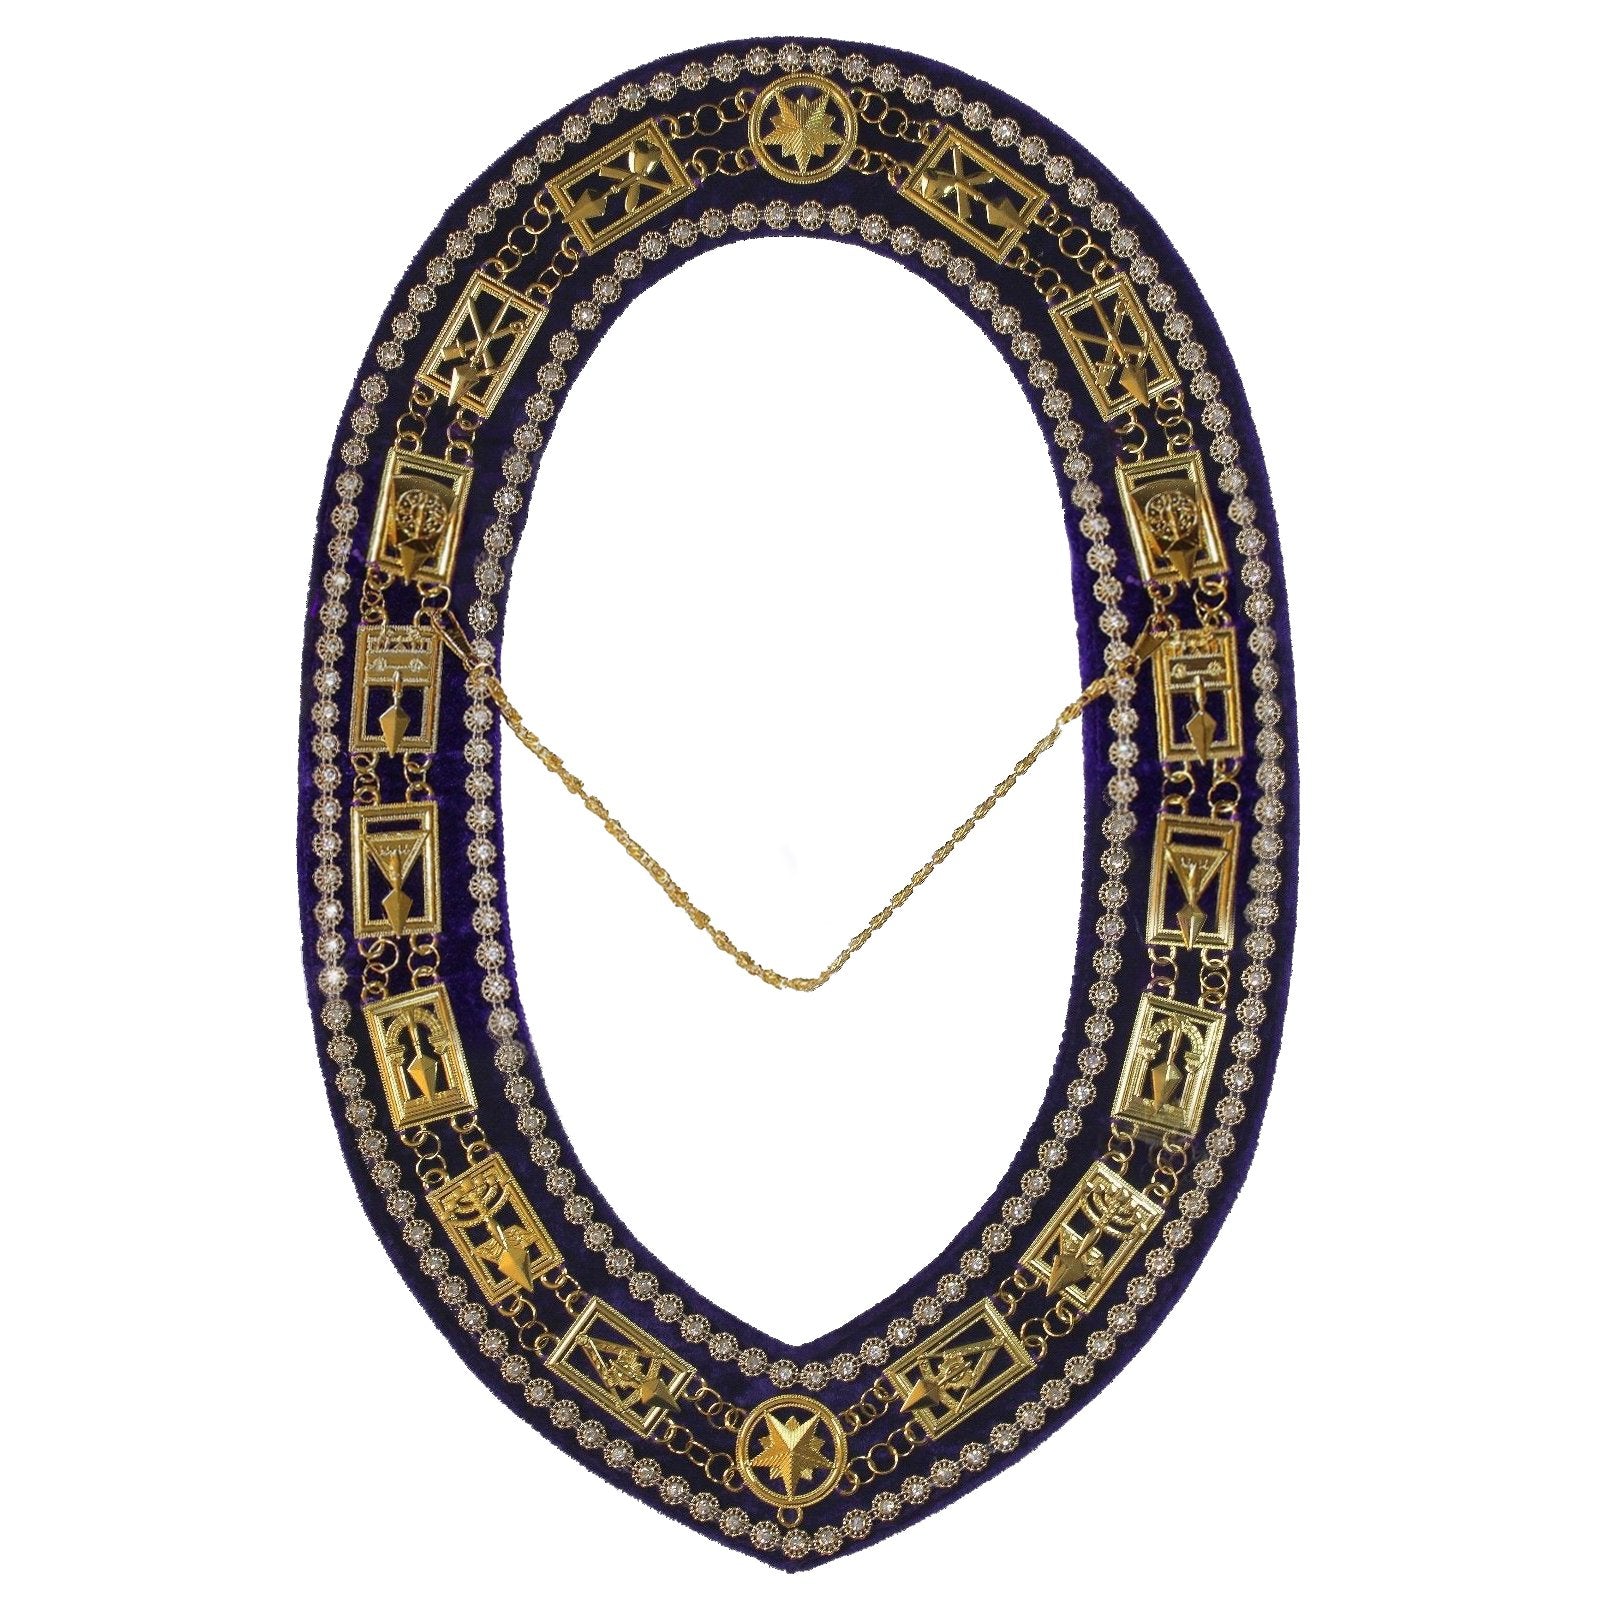 Council Chain Collar - Gold Plated with Rhinestones on Purple Velvet - Bricks Masons